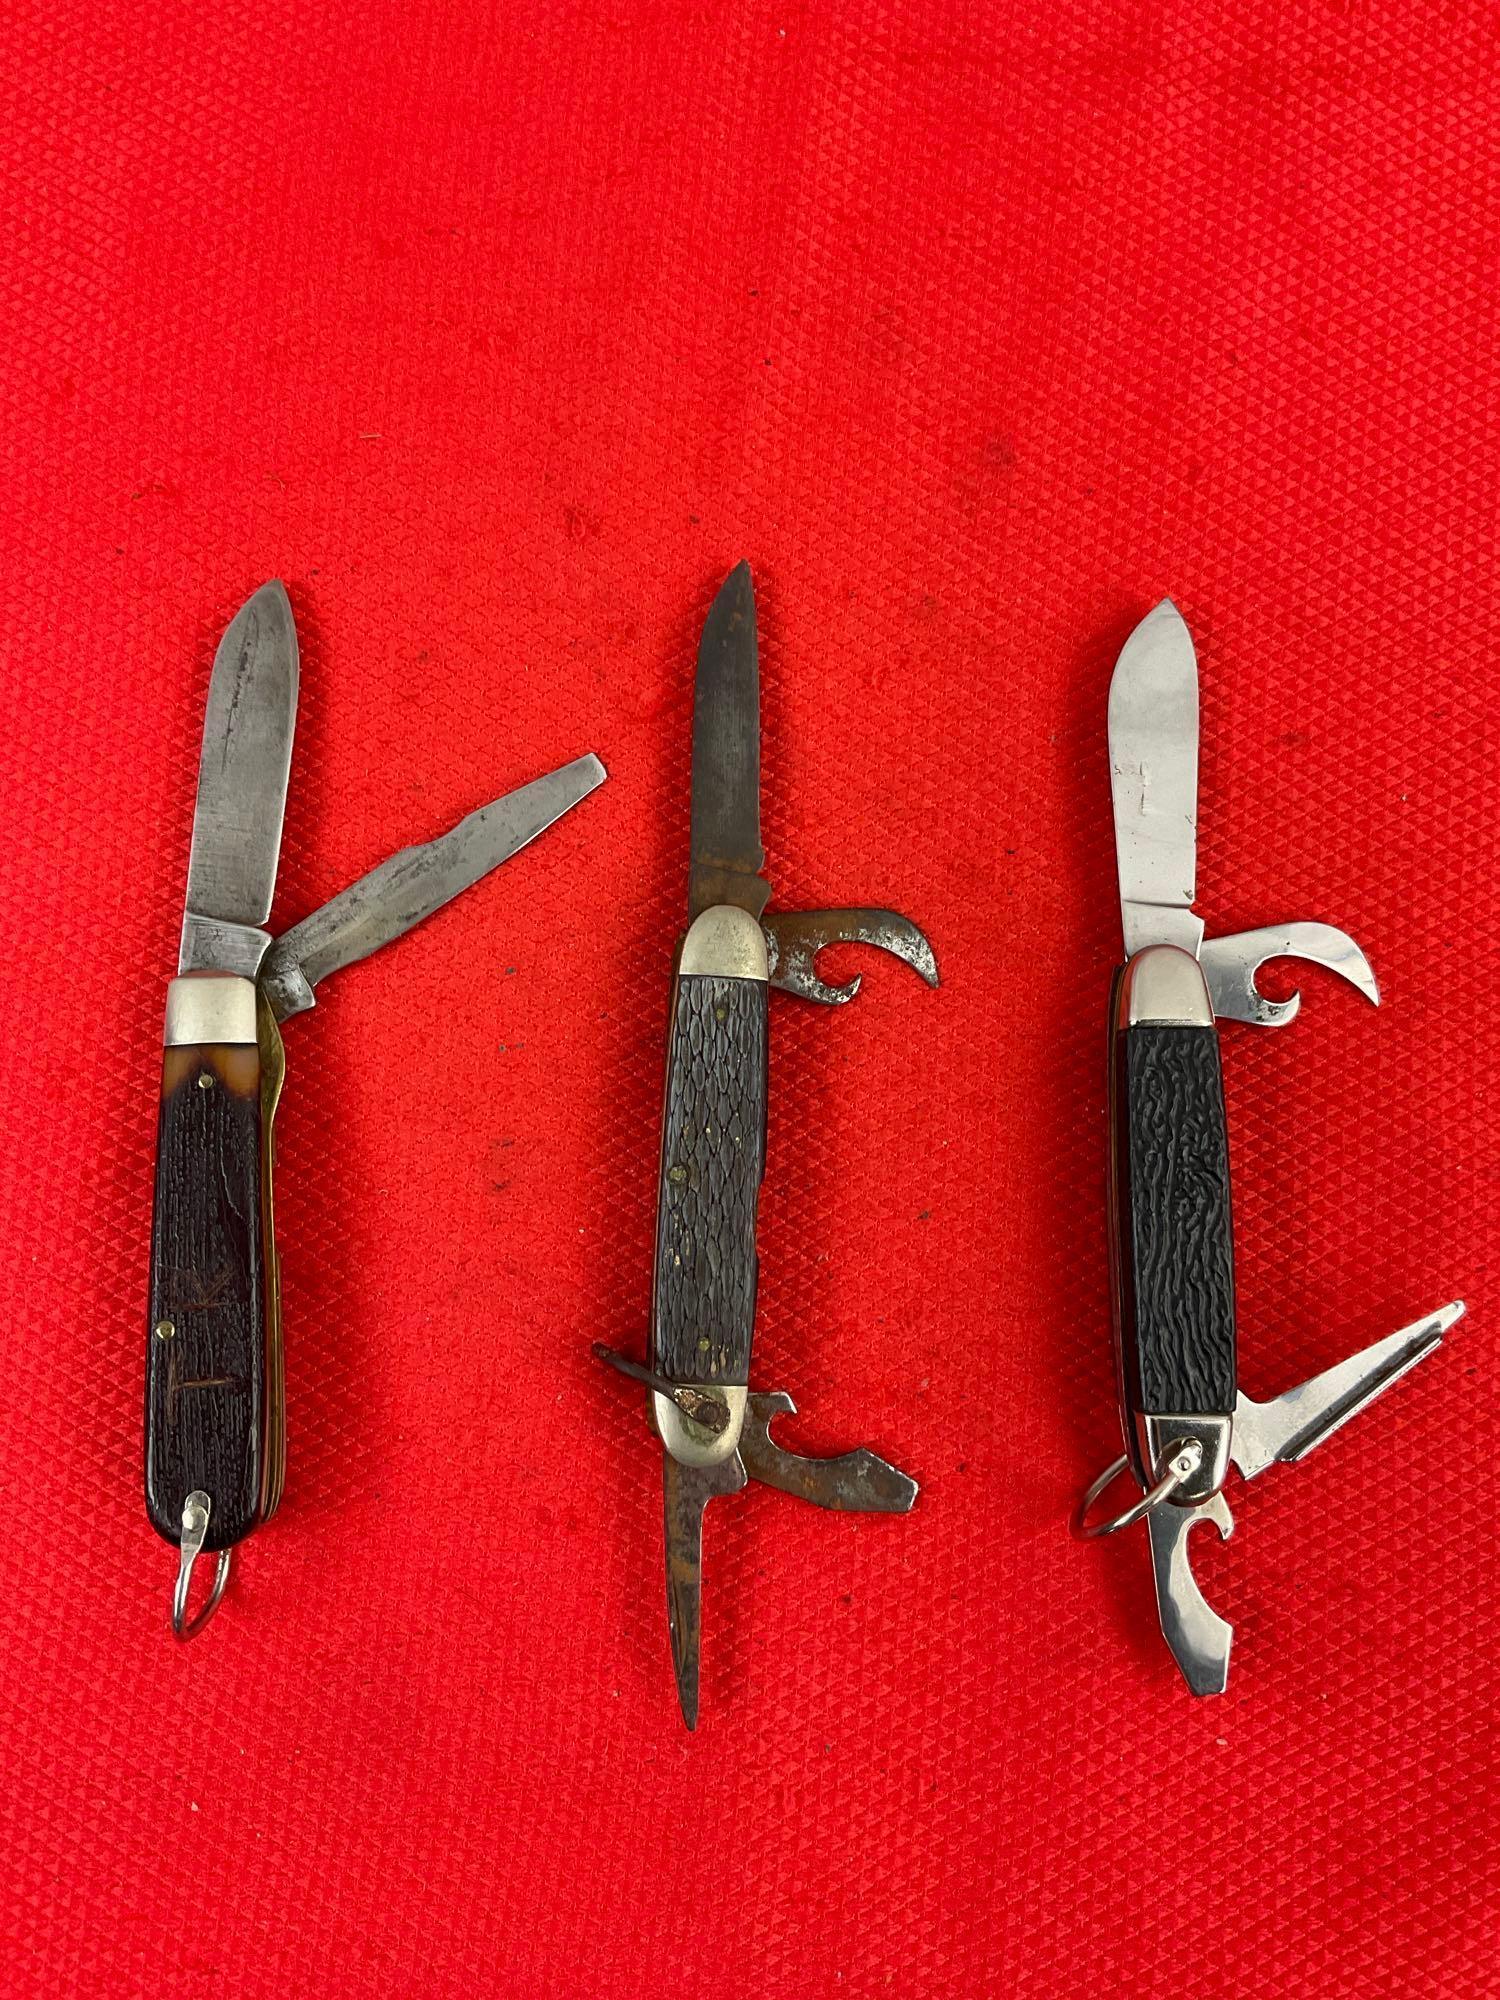 3 pcs Vintage Steel Folding Blade Utility Pocket Knife Assortment. Ulster, Imperial, Craftsman. As